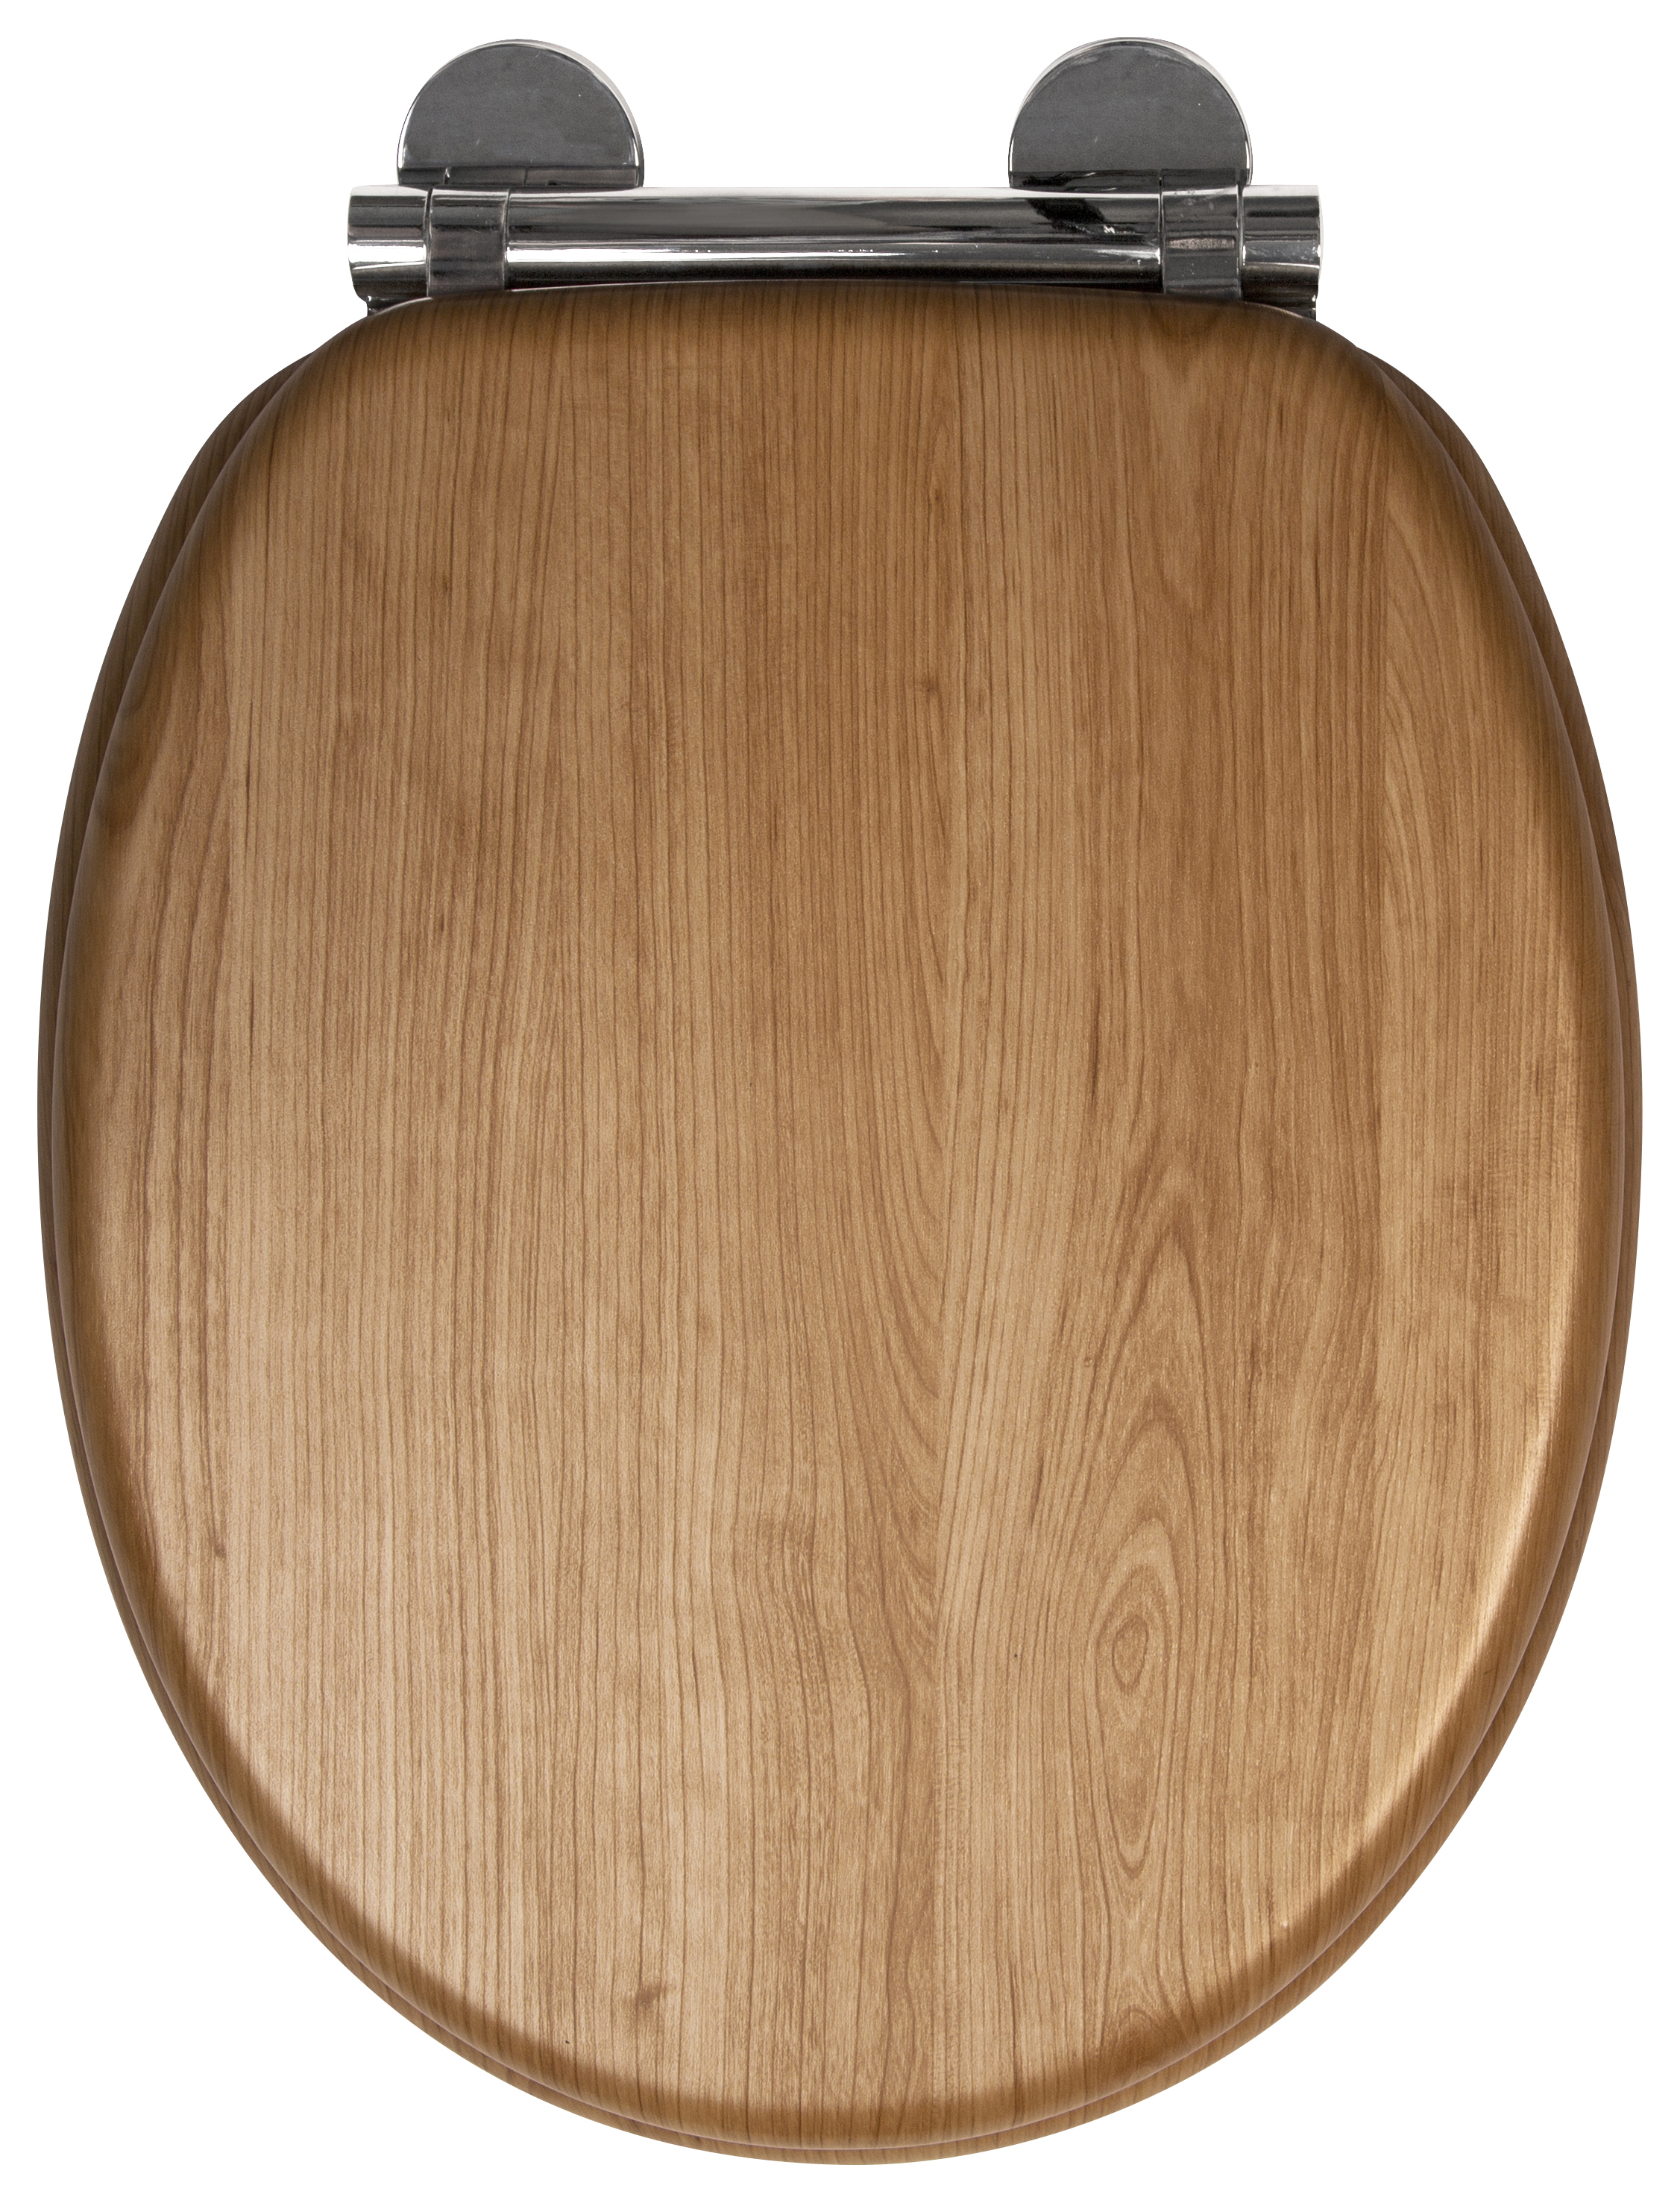 Image of Croydex Flexi-Fix™ Hartley Toilet Seat - Oak